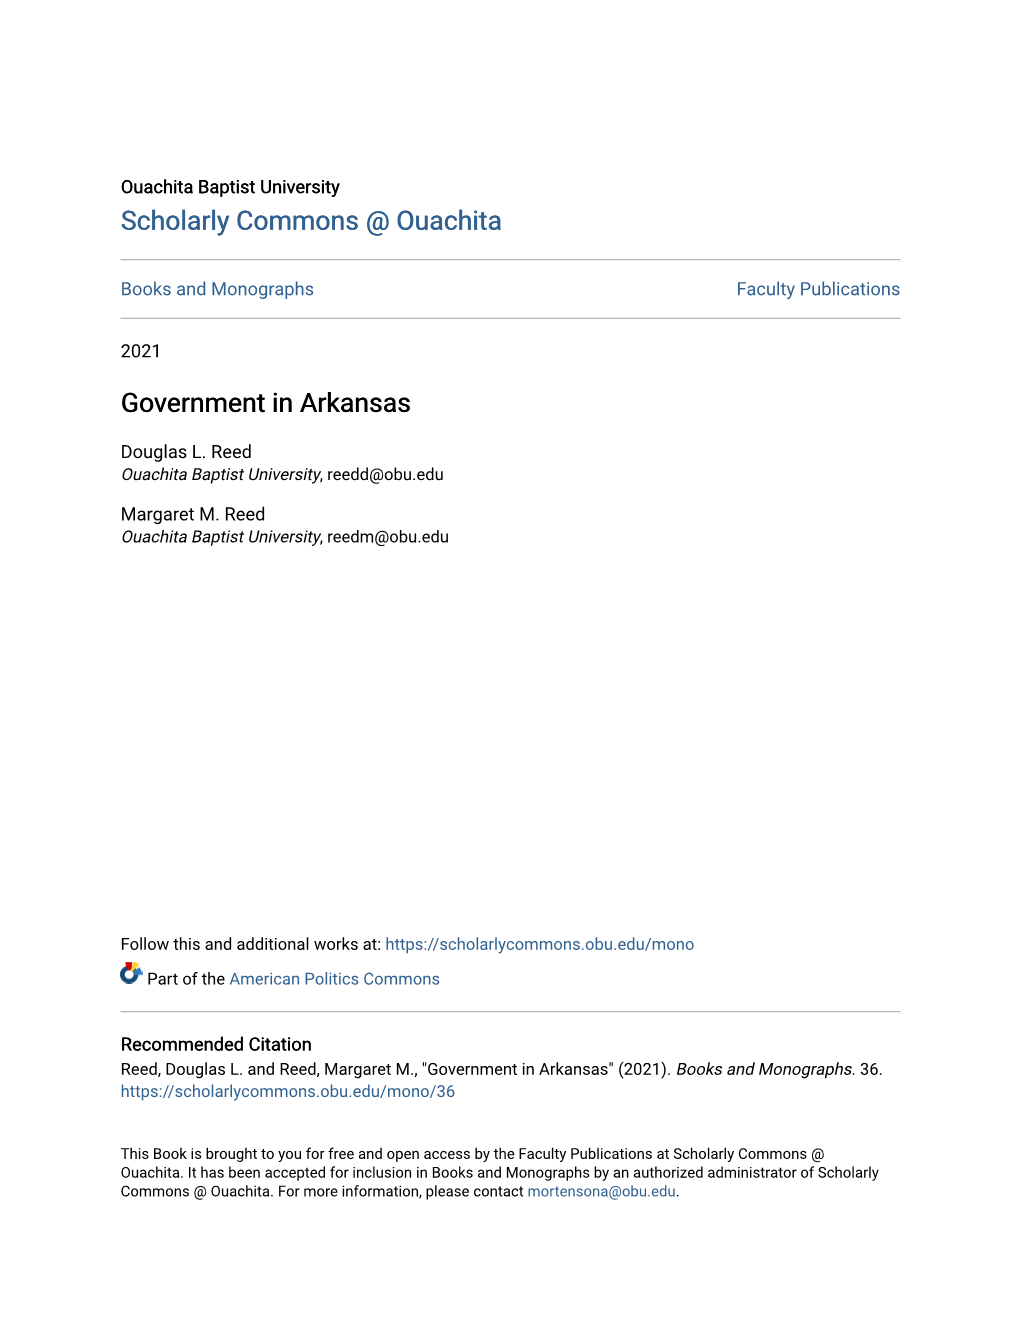 Government in Arkansas